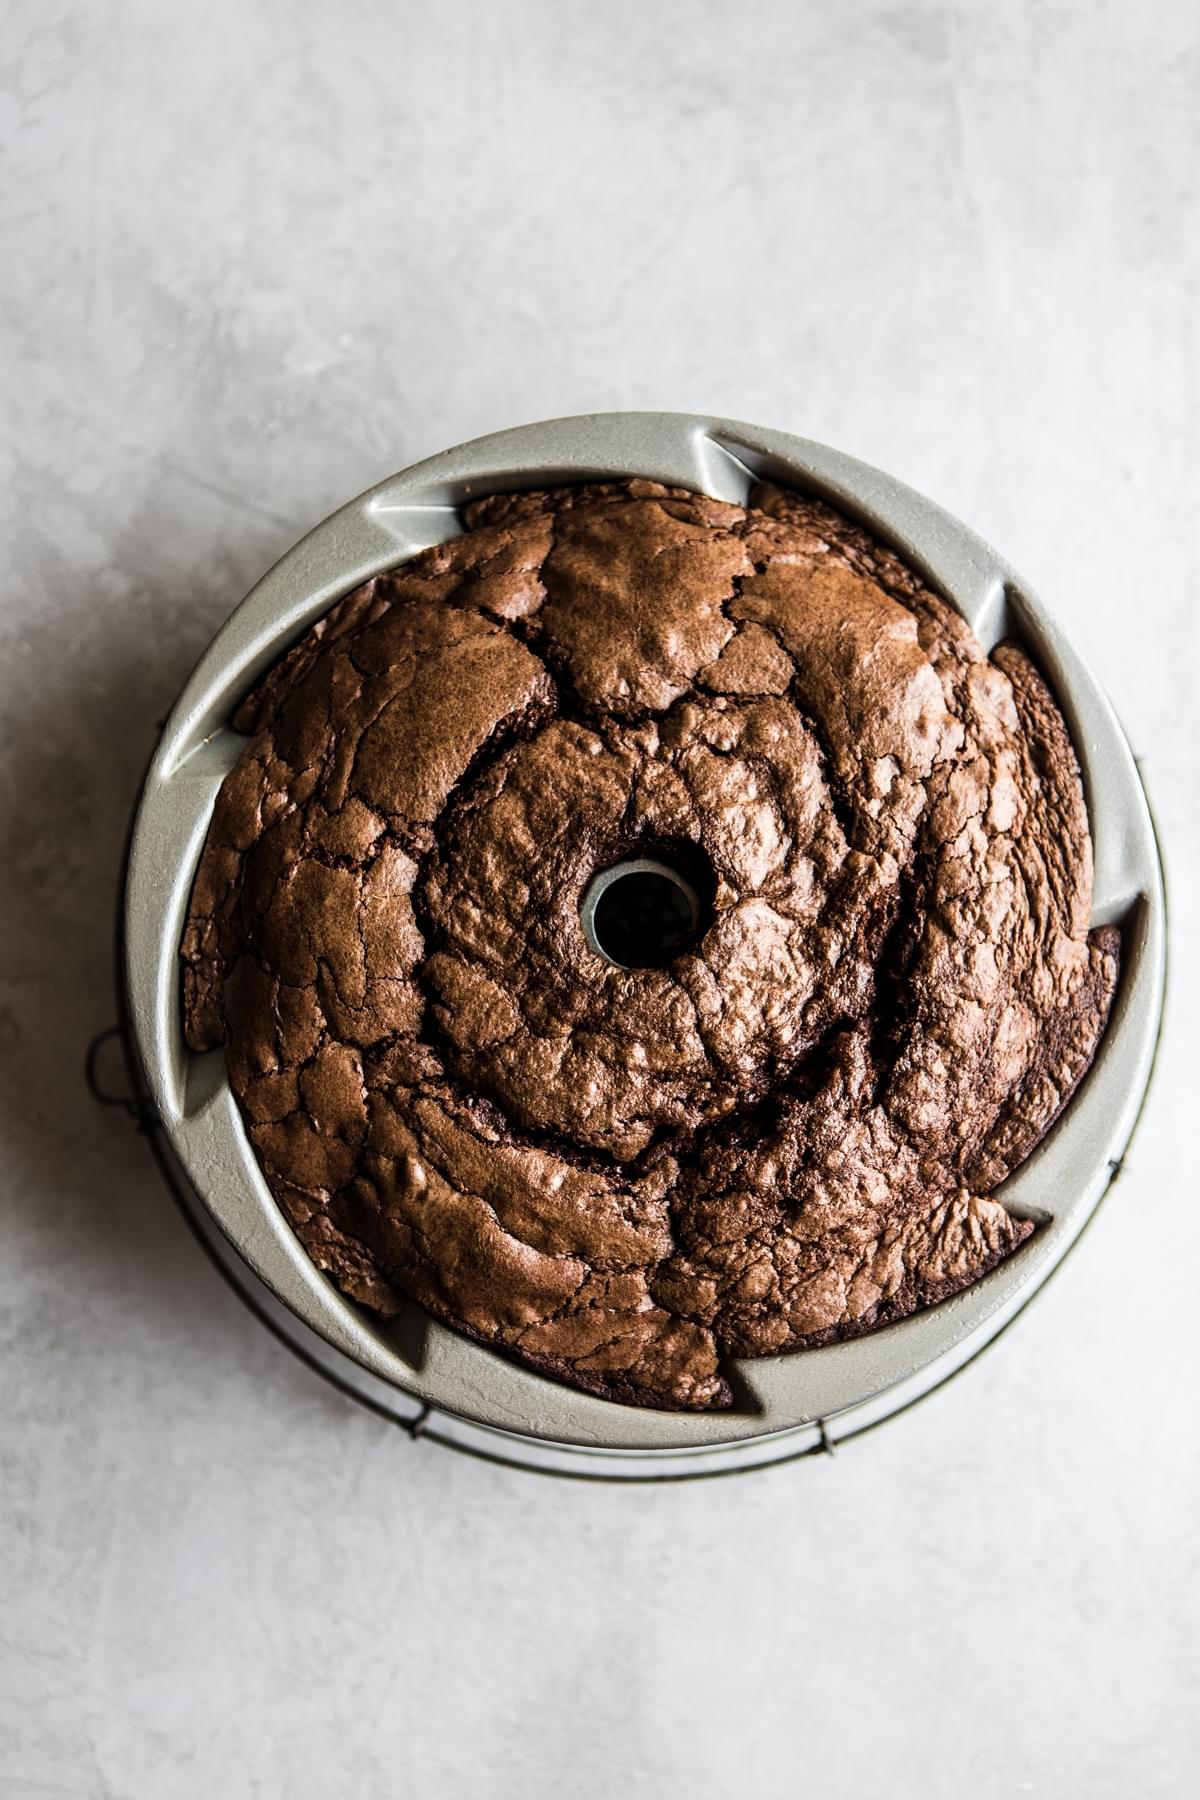 Irish Cream Chocolate cake baked in a Bundt Cake pan